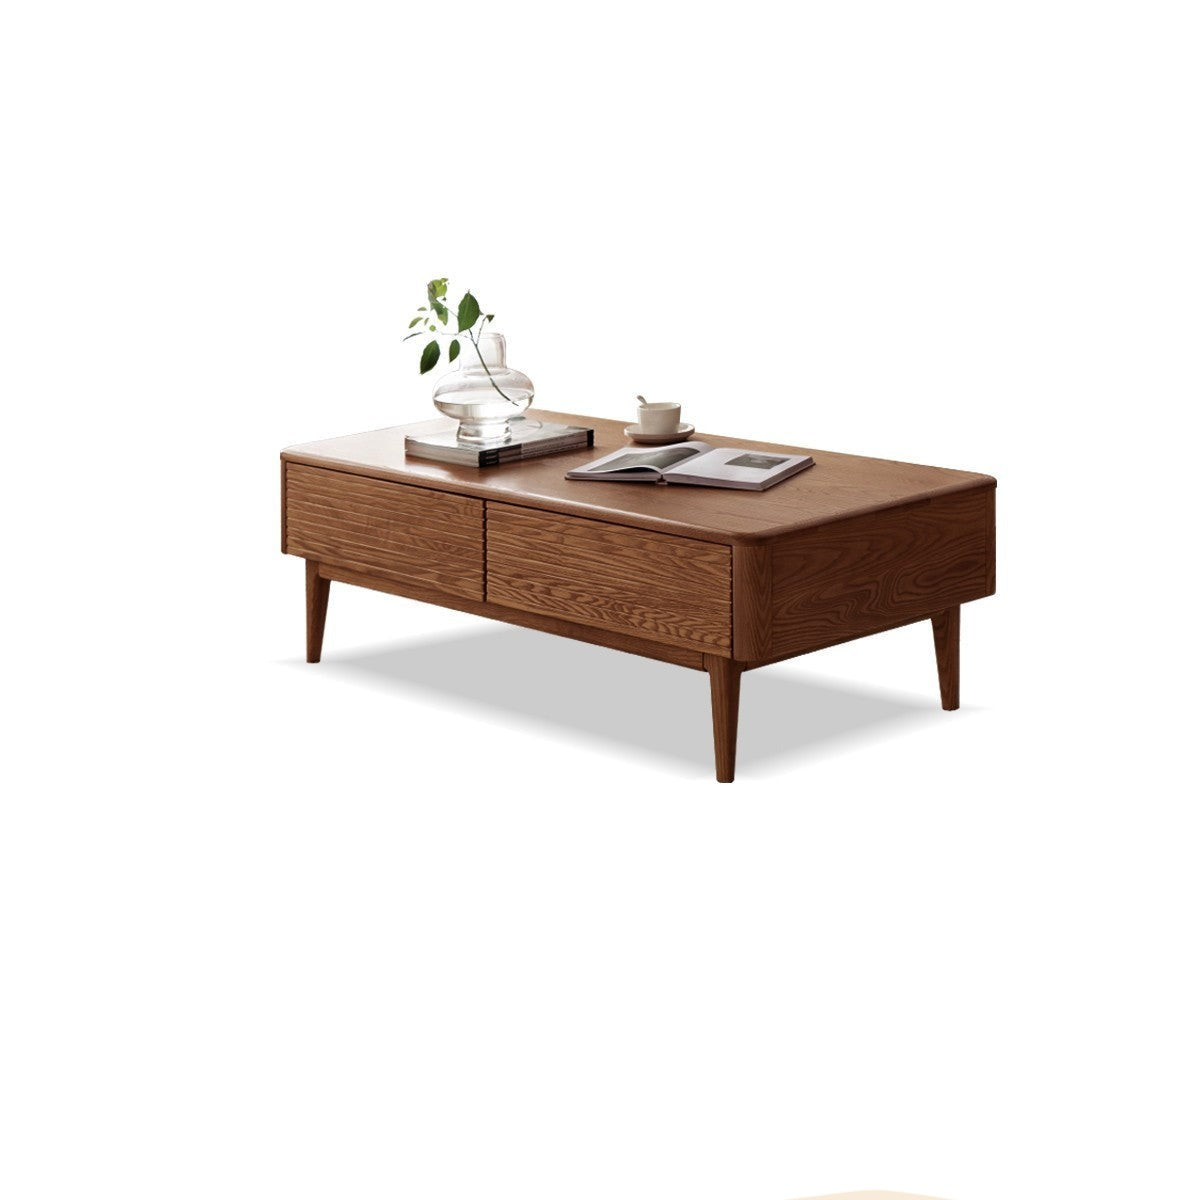 Ash solid wood slate coffee table "